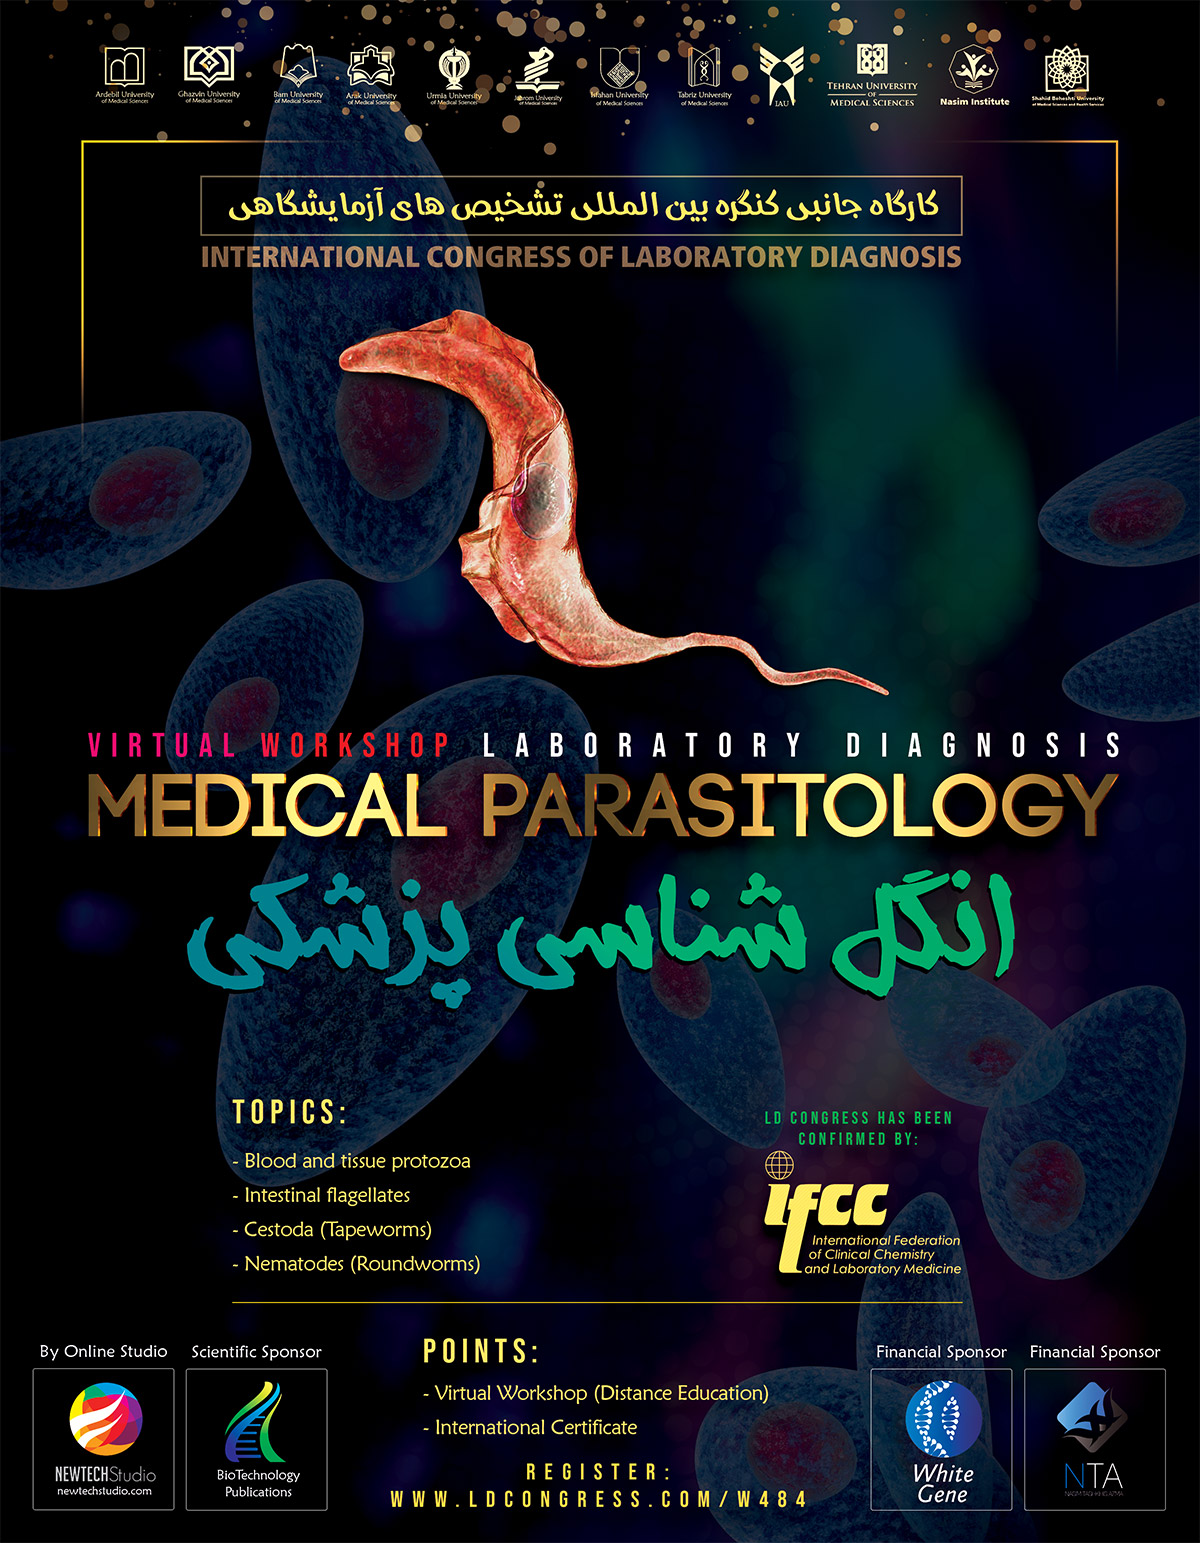 Laboratory diagnosis of medical parasitology